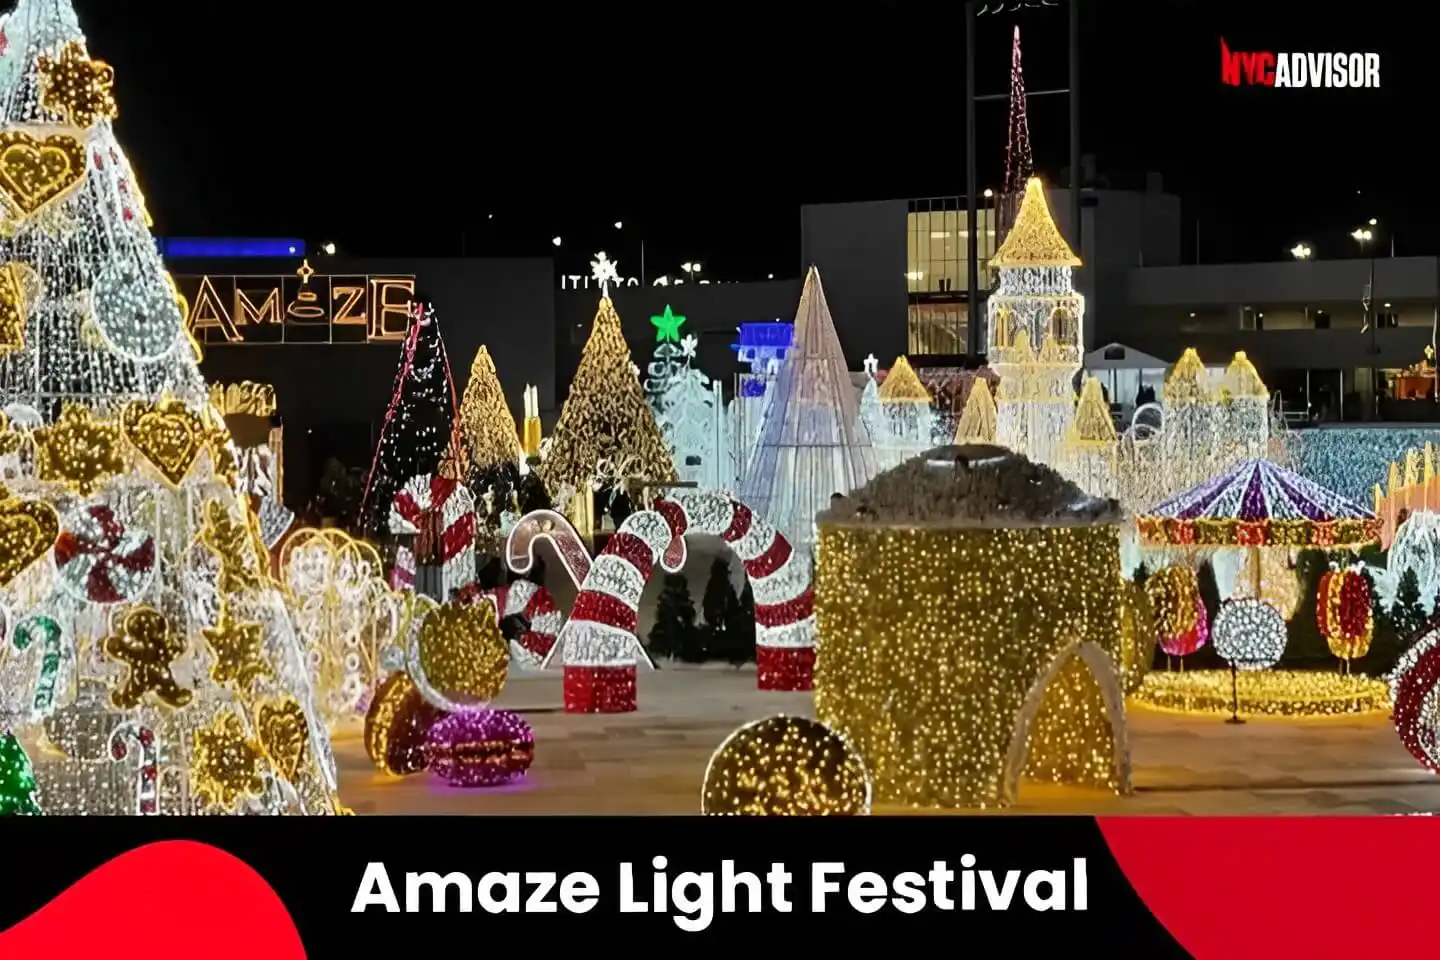 Amaze Light Festival, December in NYC